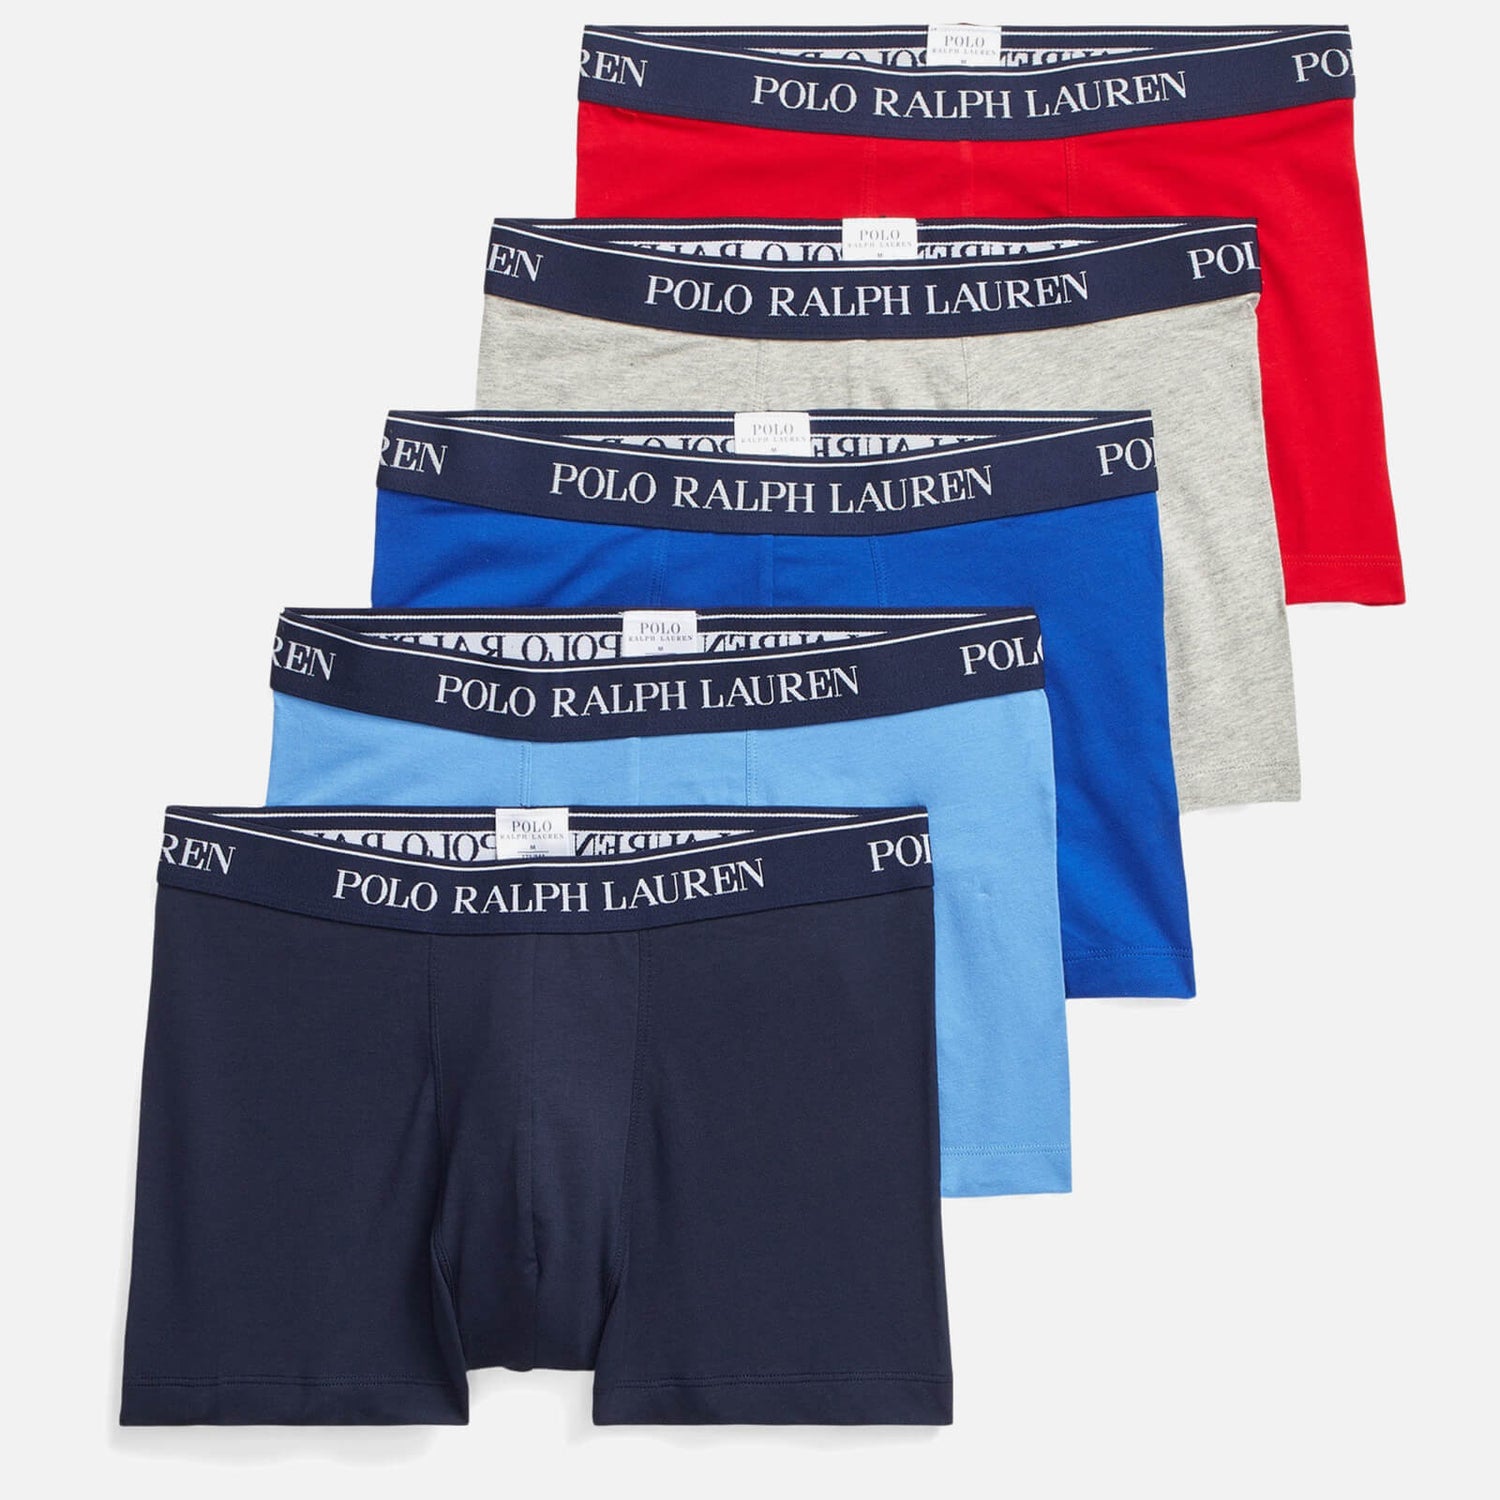 Polo Ralph Lauren Men's 5-Pack Trunk Boxer Shorts - Red/Grey/Royal/Blue/Navy